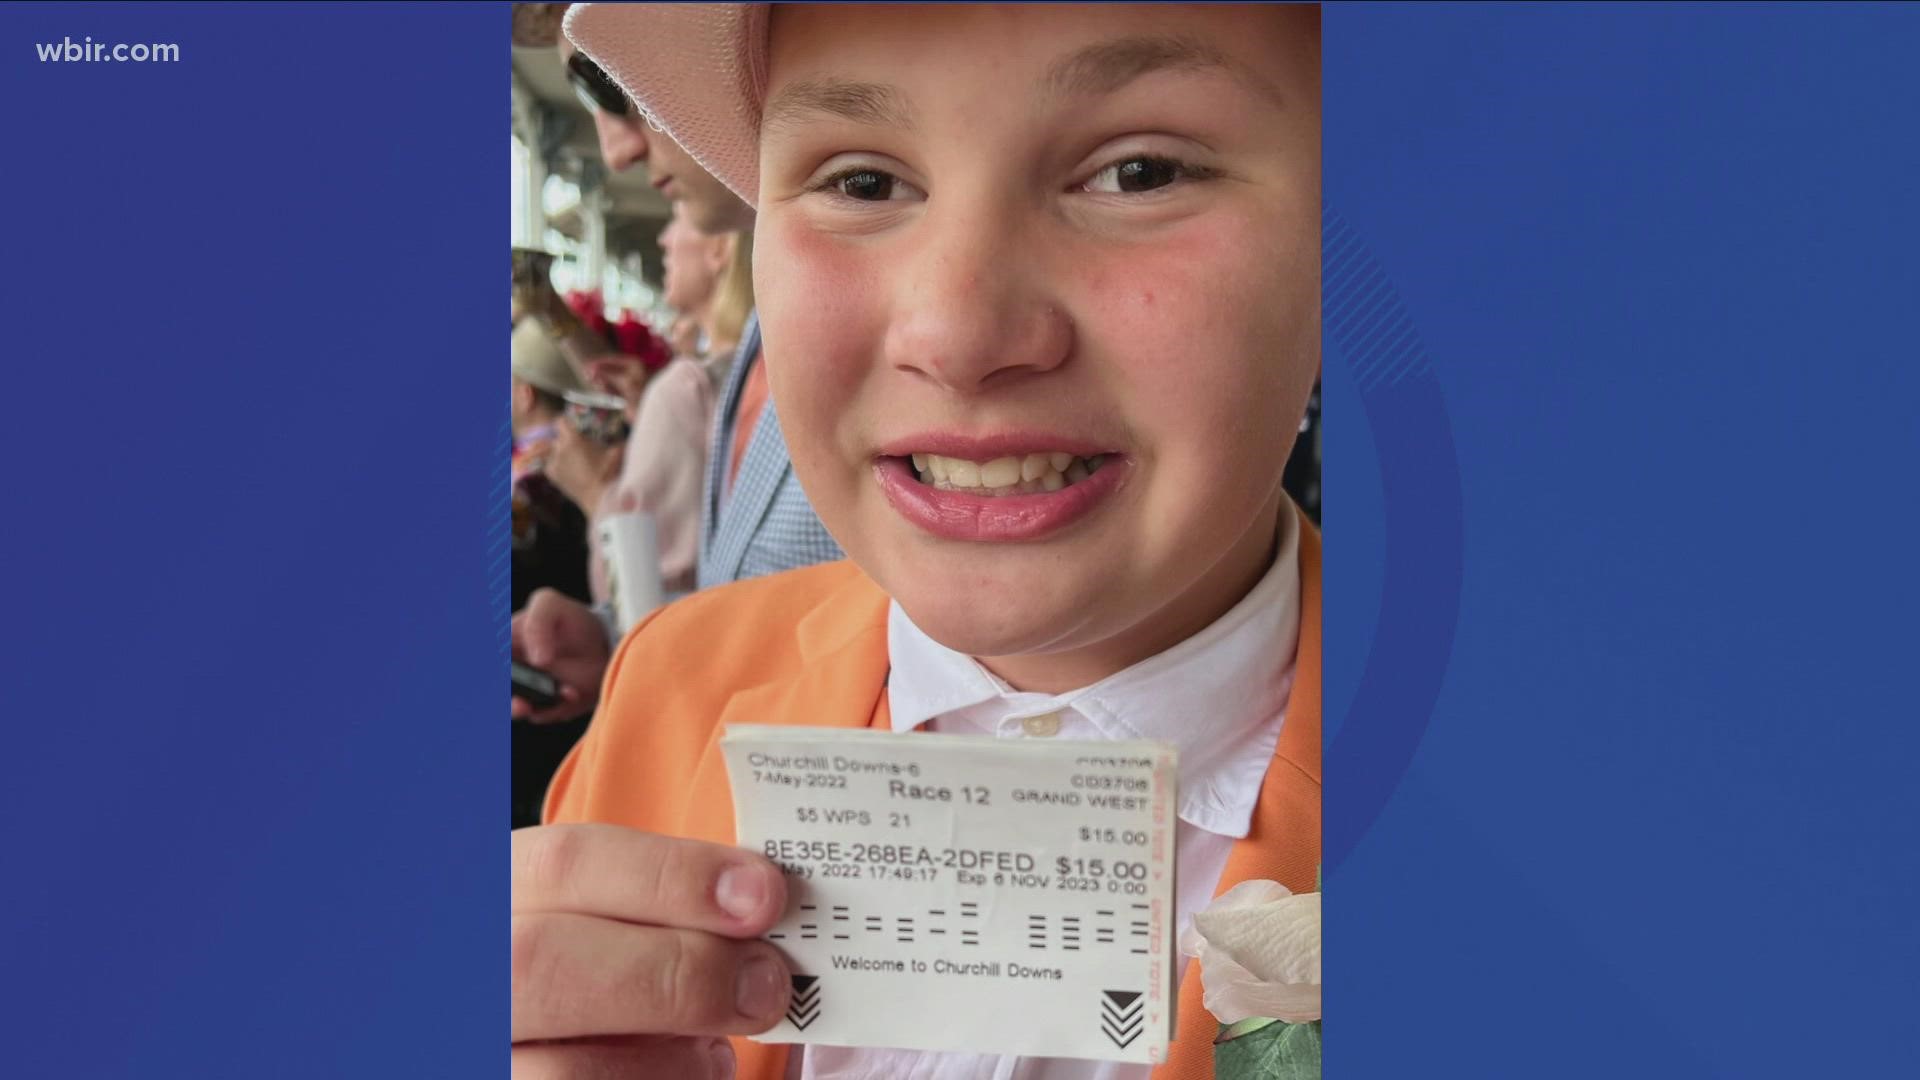 AJ Cucksey, a local child battling cancer, scored a winning bet on Rich Strike for yesterday's Kentucky Derby race.